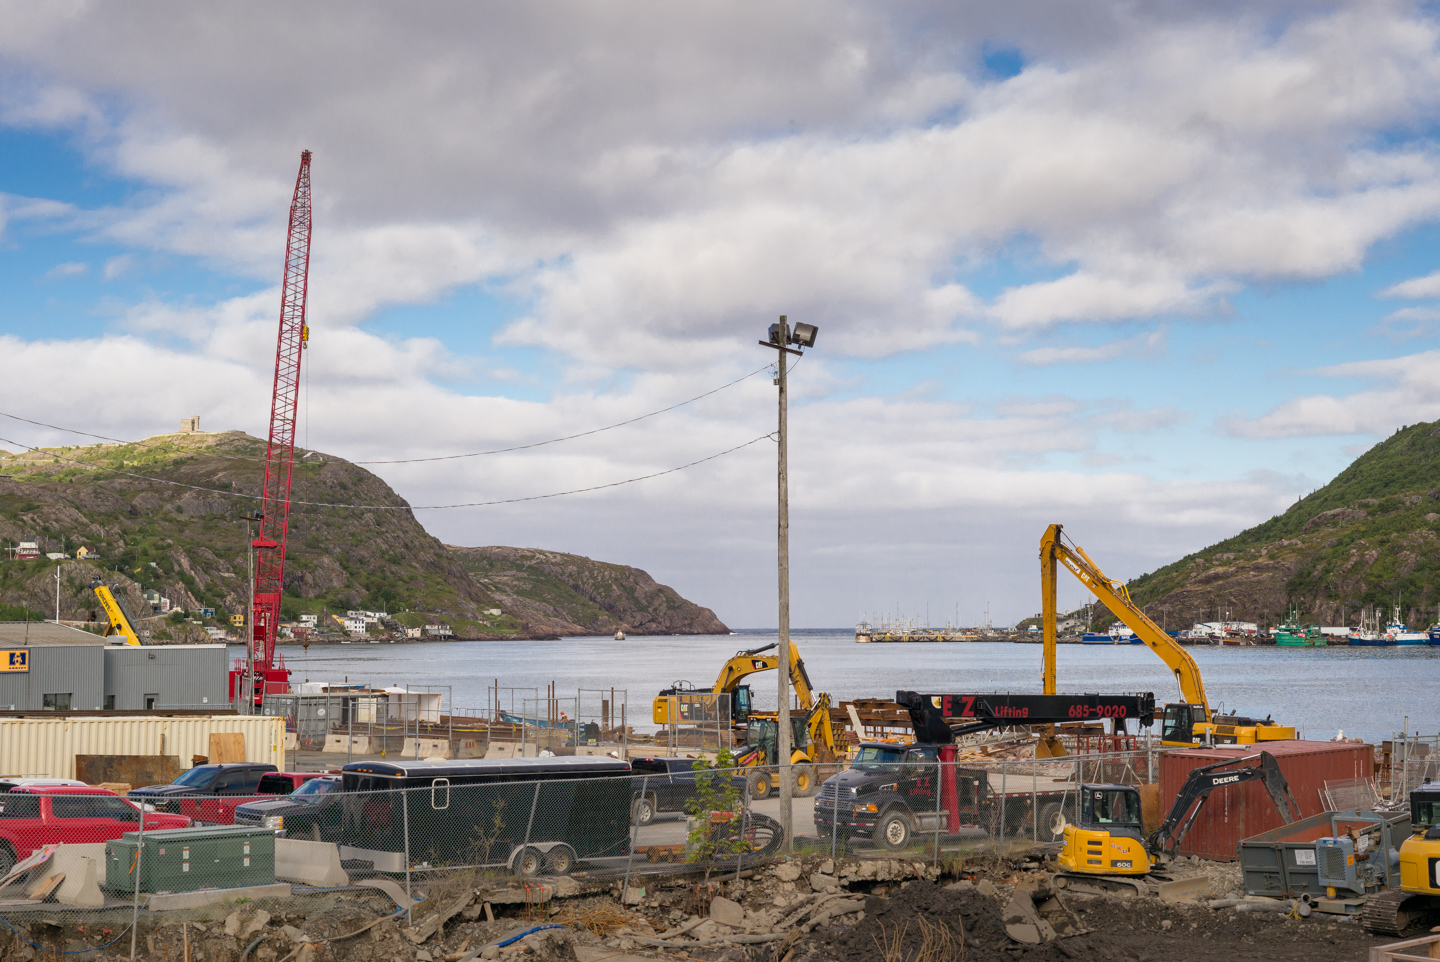 Construction in the harbor. St. John’s, Newfoundland 2016